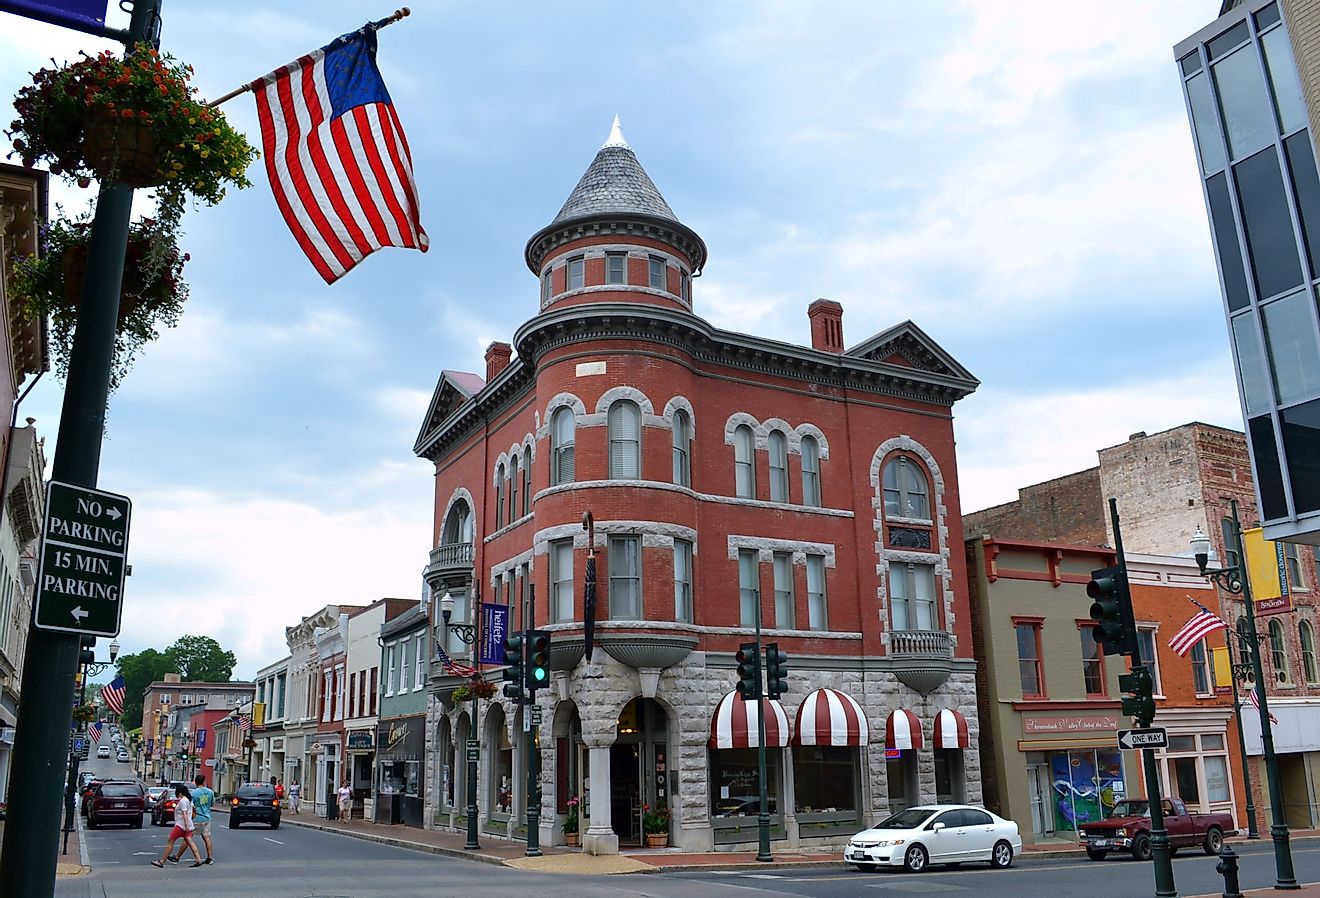 Downtown Historic Staunton, Virginia. Image credit MargJohnsonVA via Shutterstock